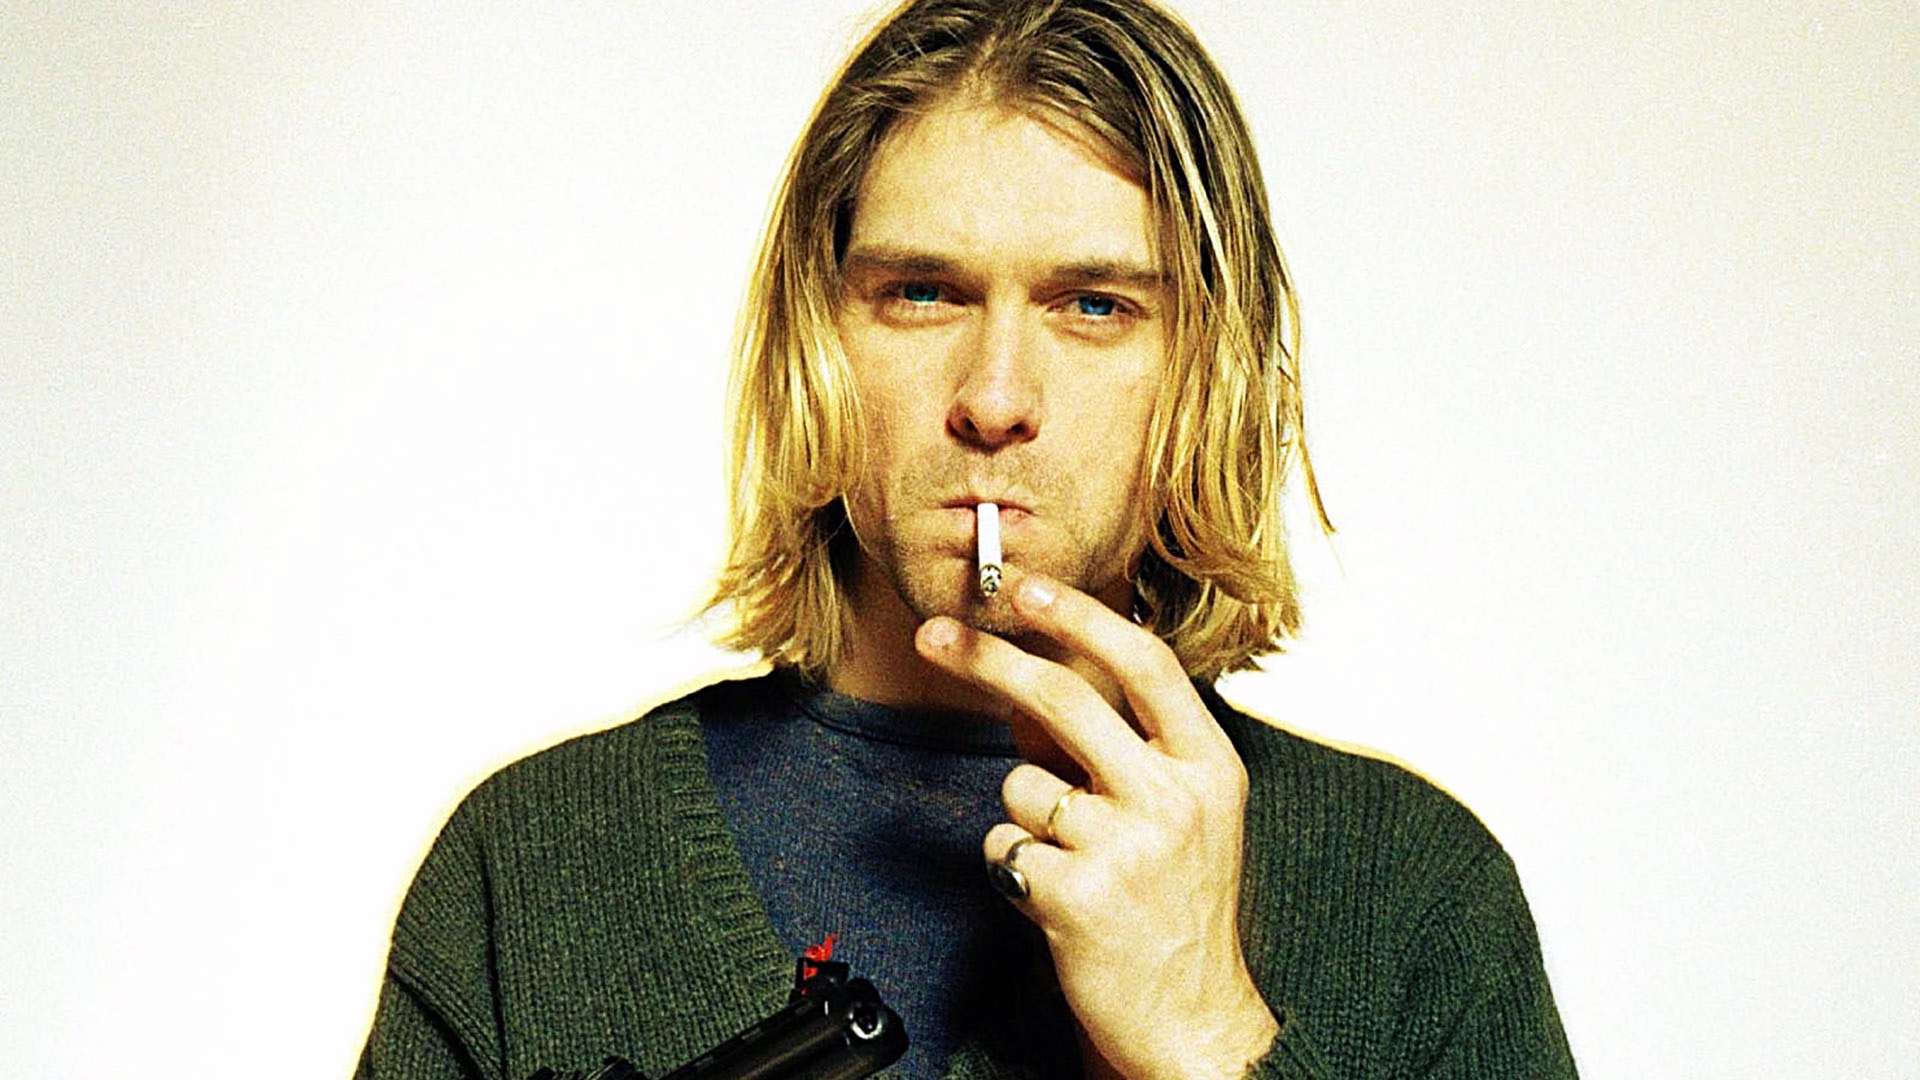 Kurt Cobain 1080p Wallpaper (Retouched) by shadowXP6 on DeviantArt